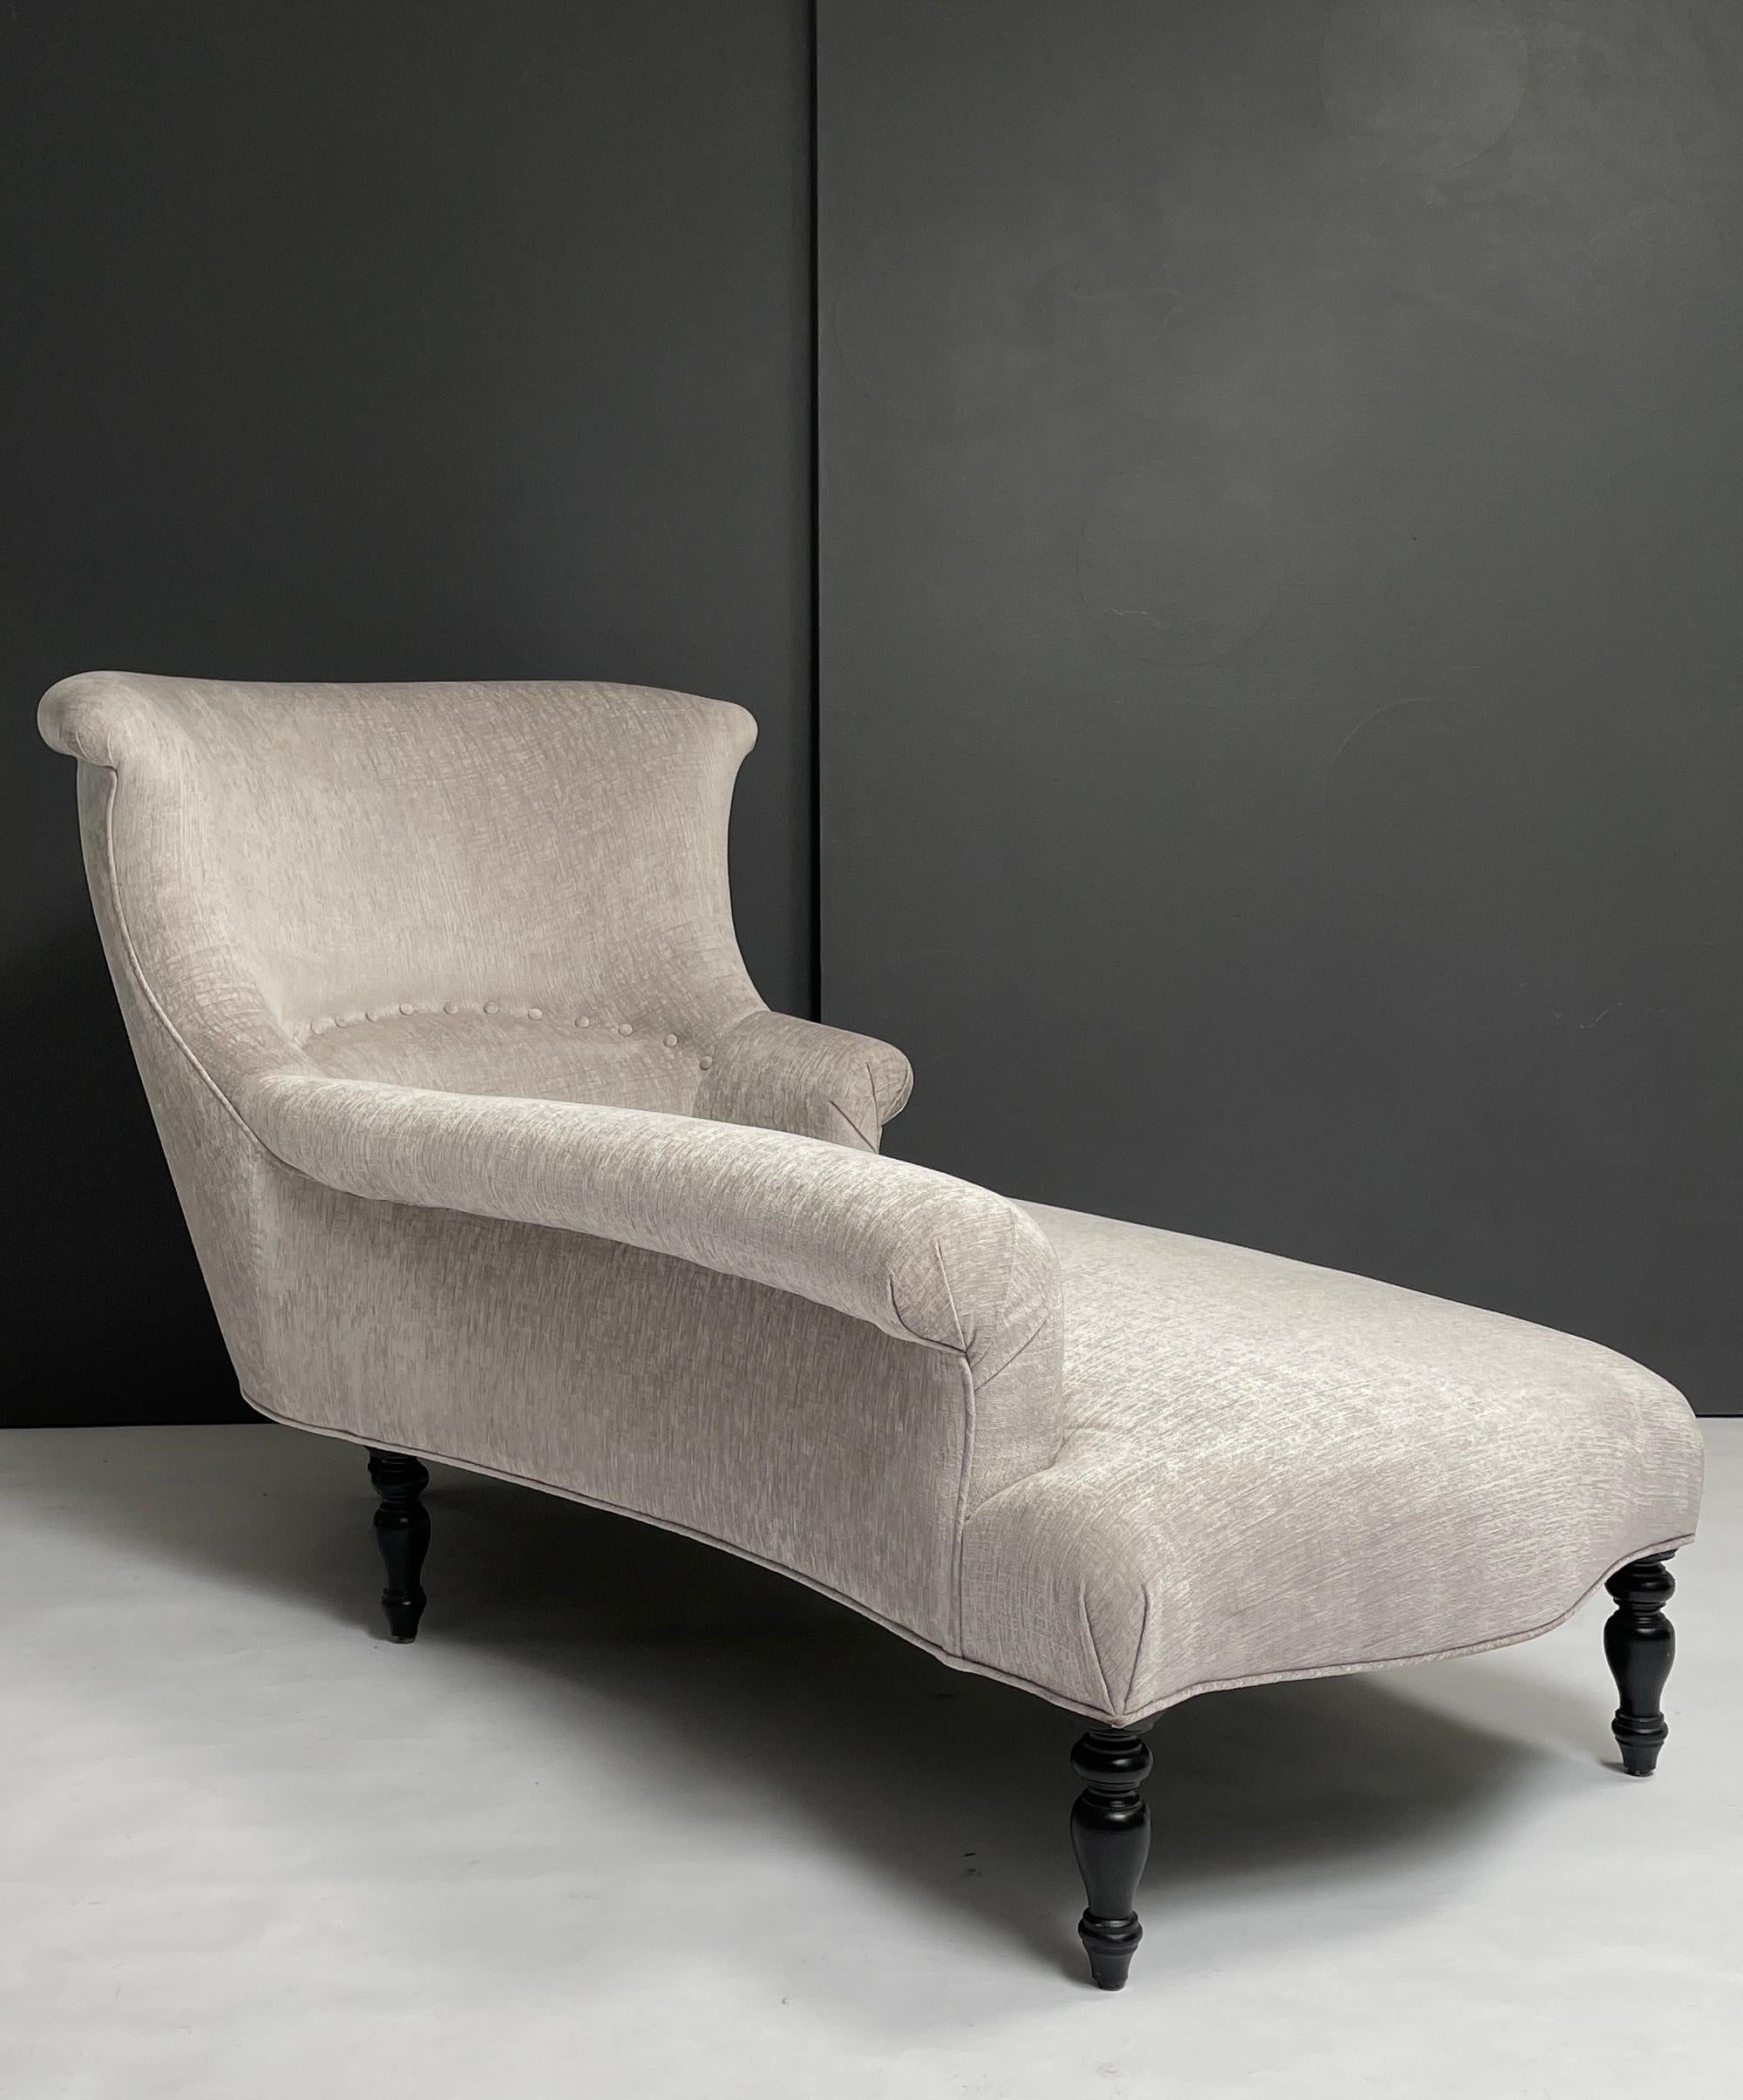 Garronne Chaise Lounge by Bourgeois Boheme Atelier, Silver For Sale 7